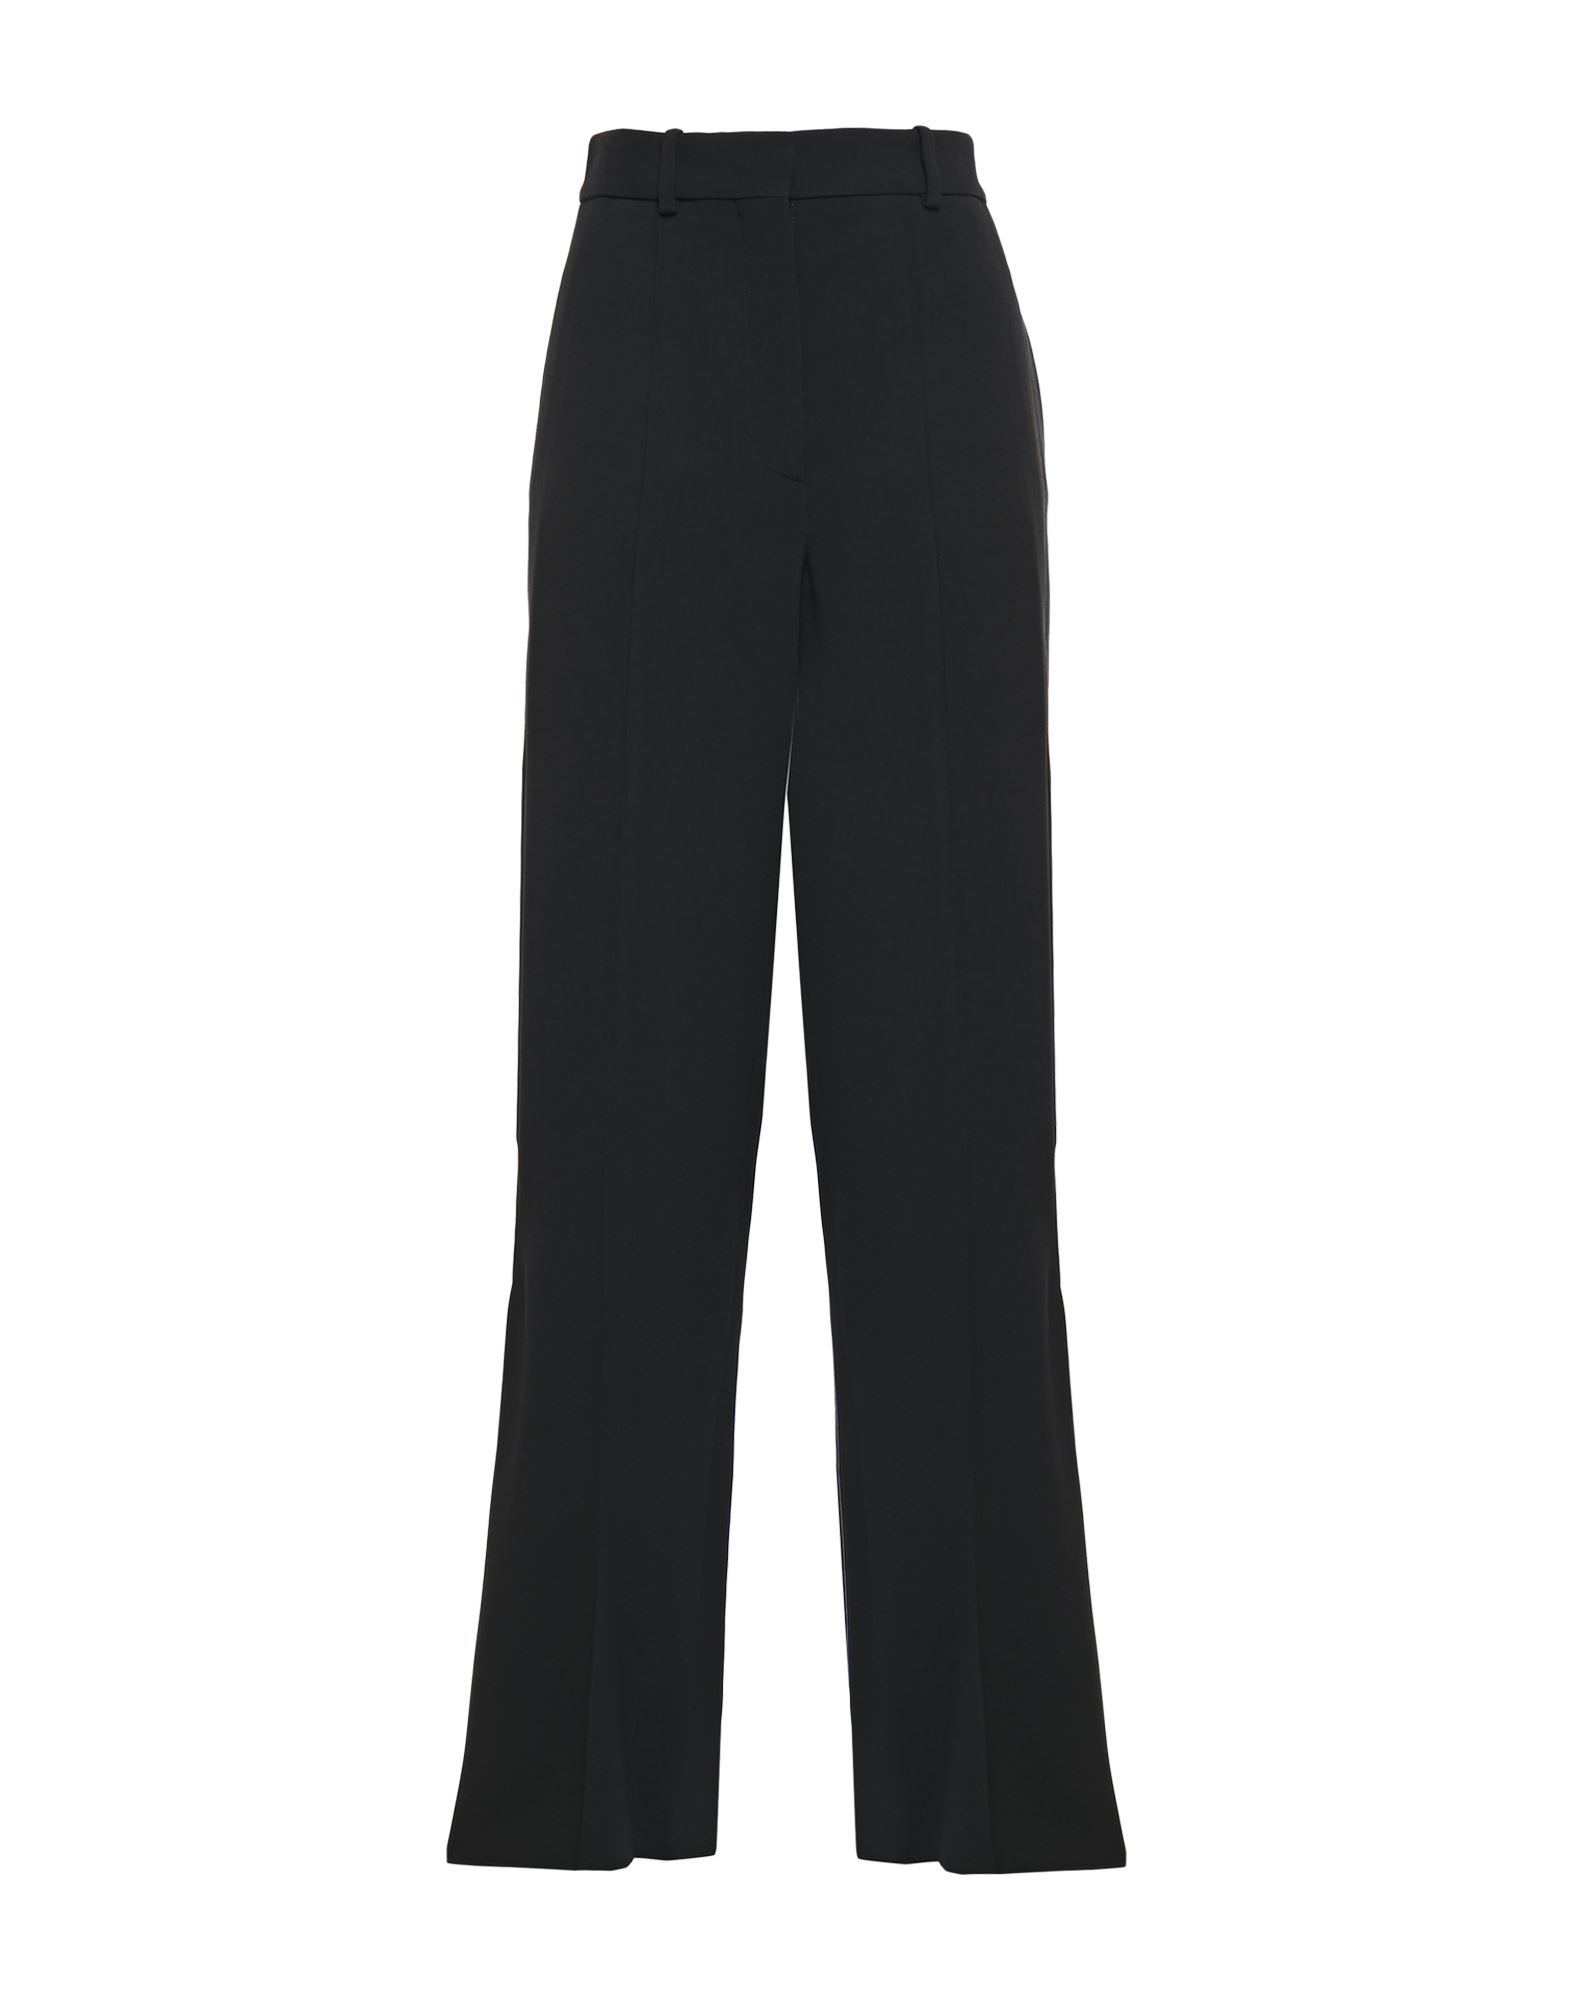 Victoria Beckham Pants In Black